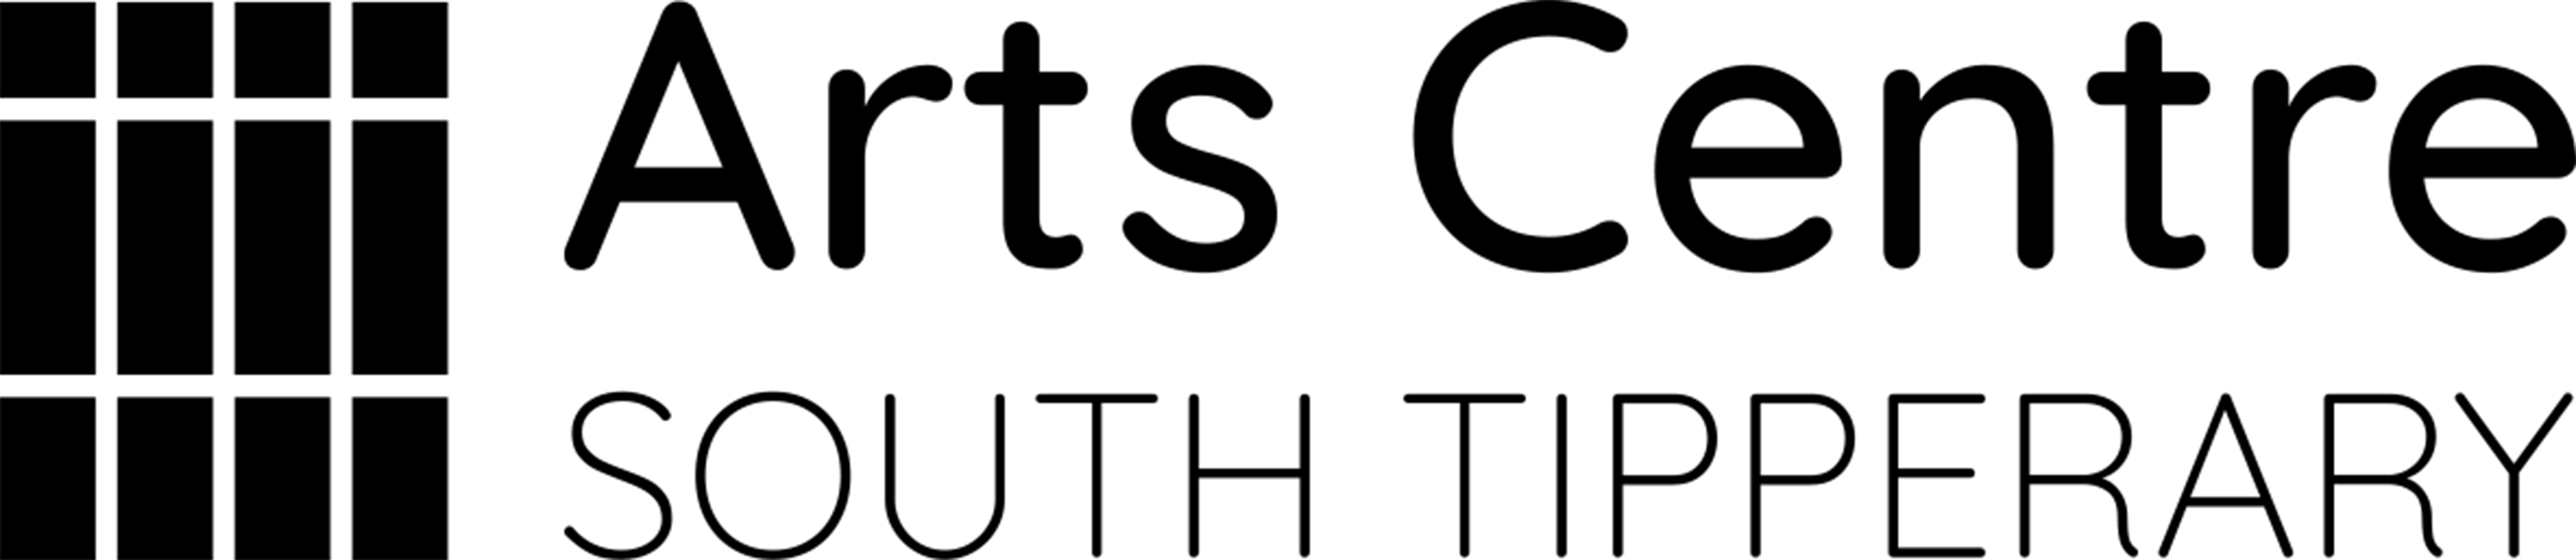 Logo all black